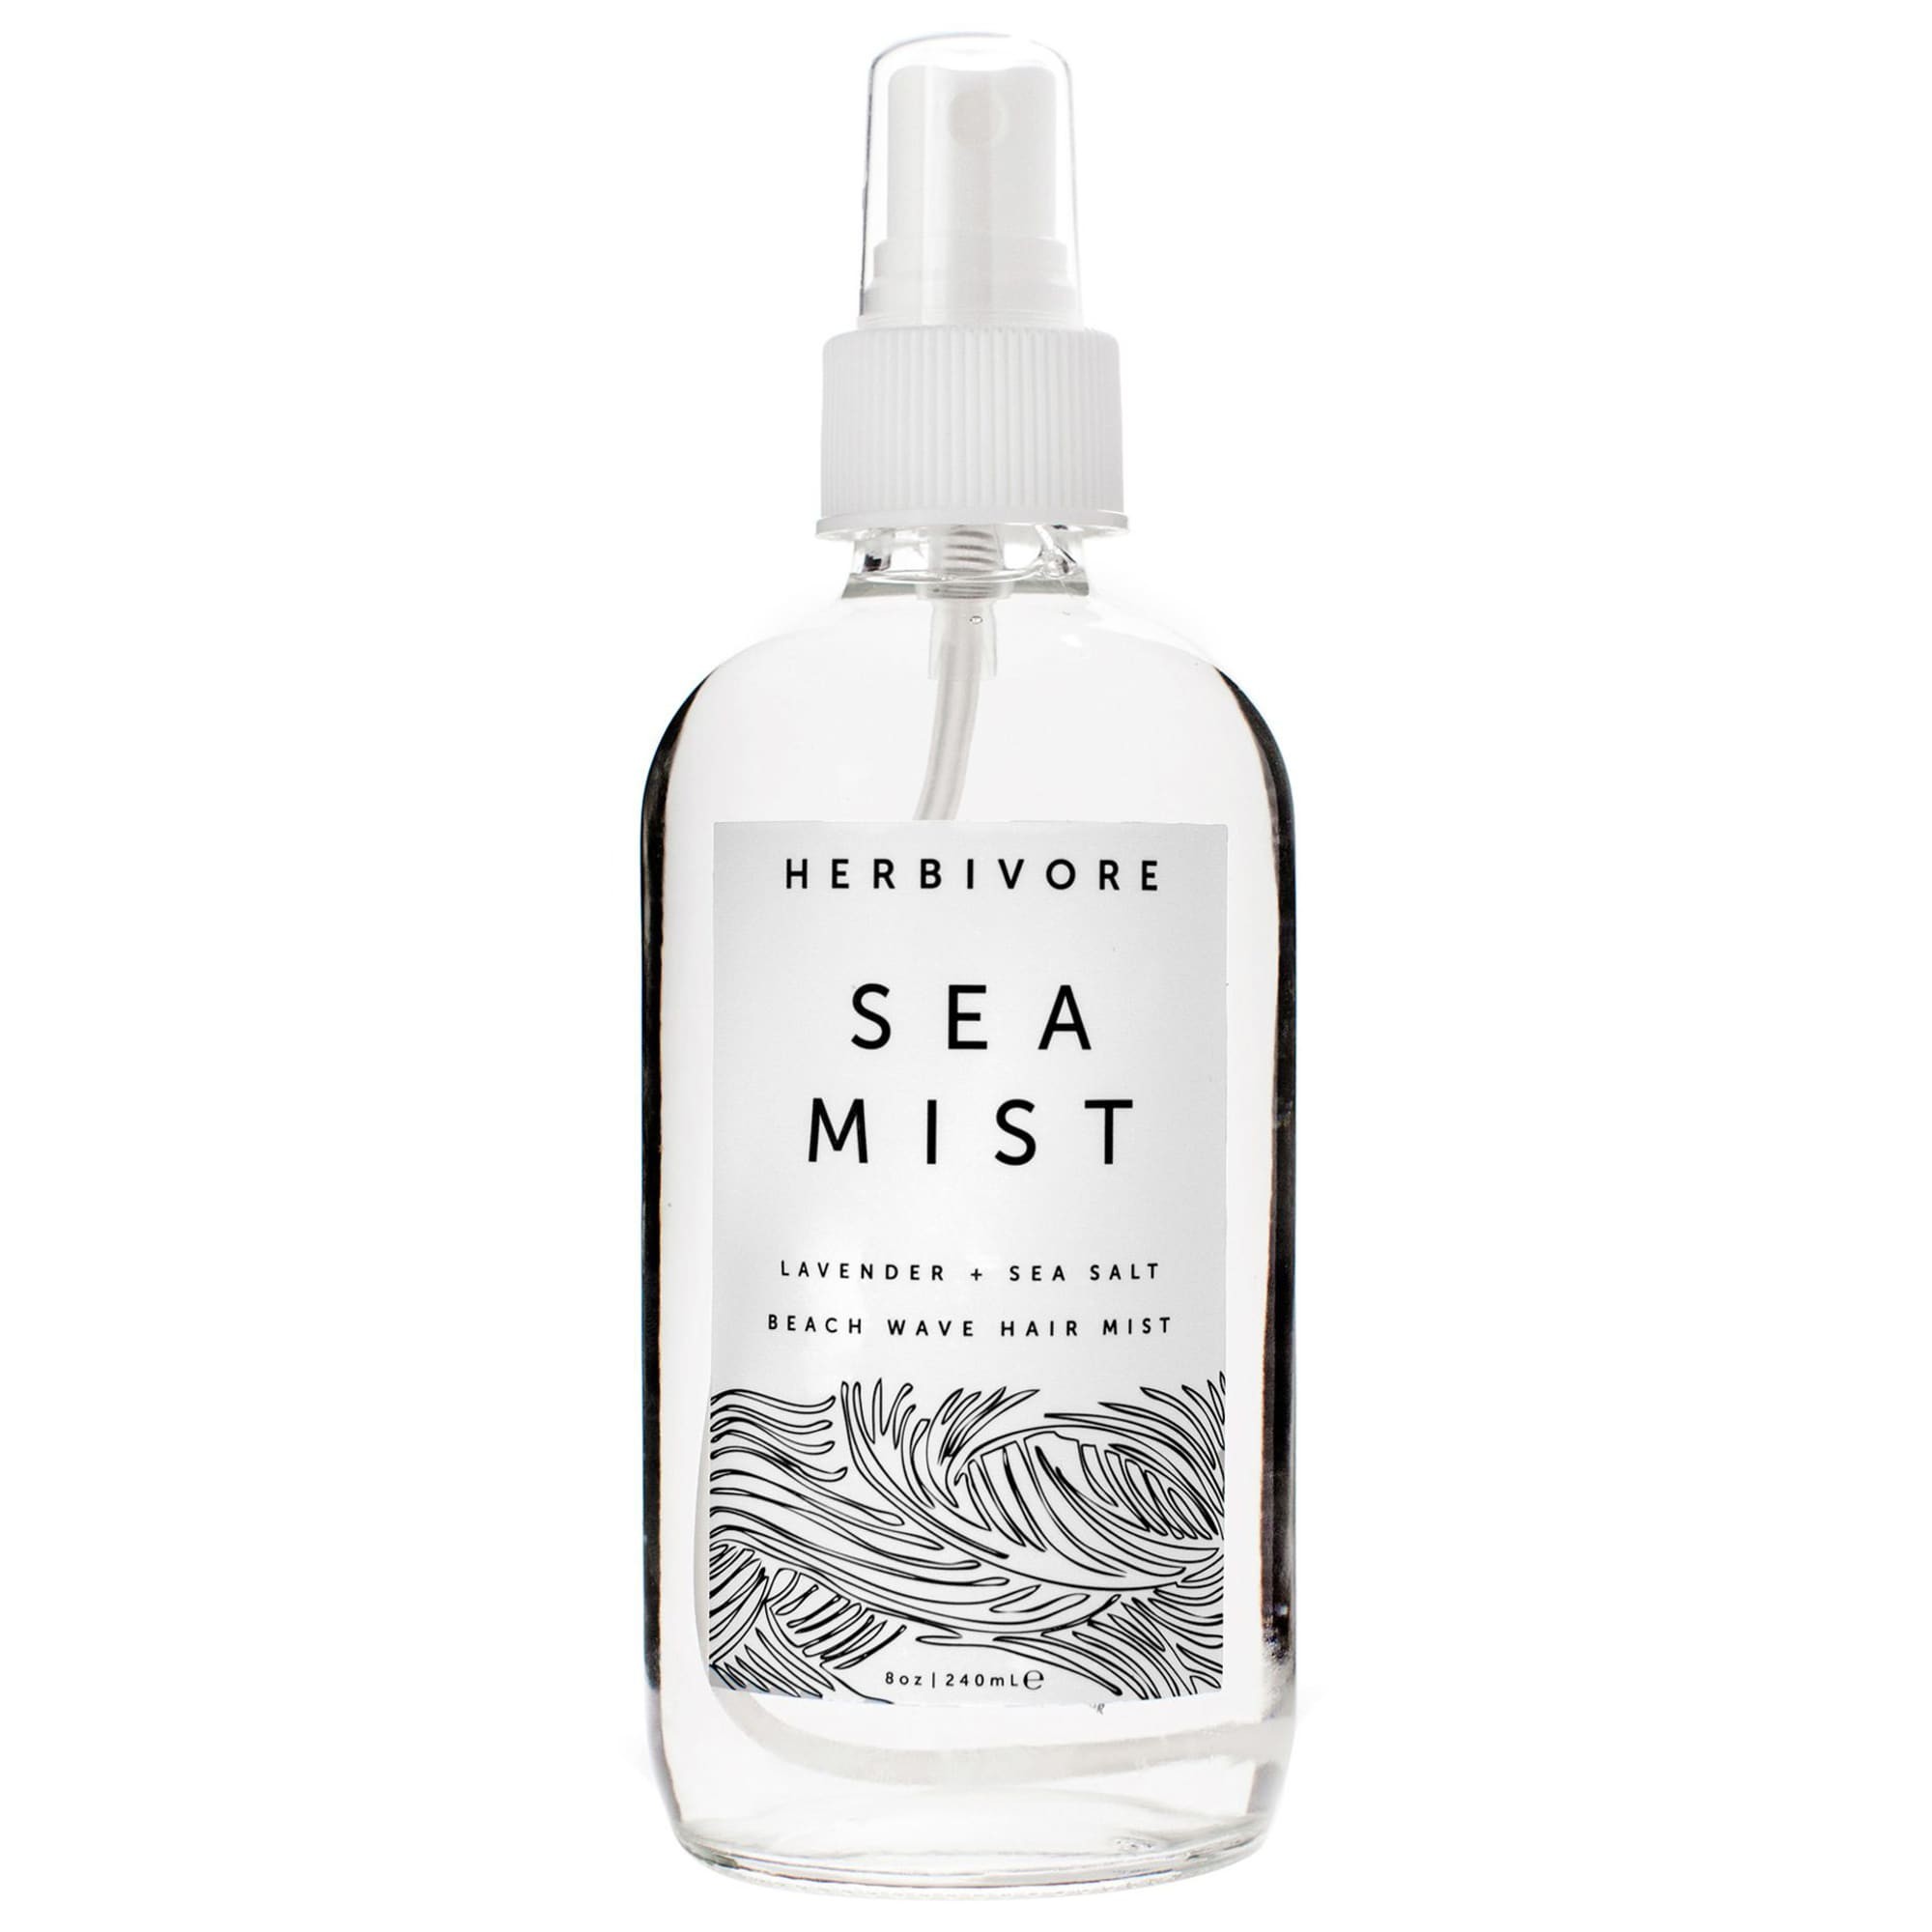 Herbivore Sea Mist Lavender + Sea Salt Beach Wave Hair Mist